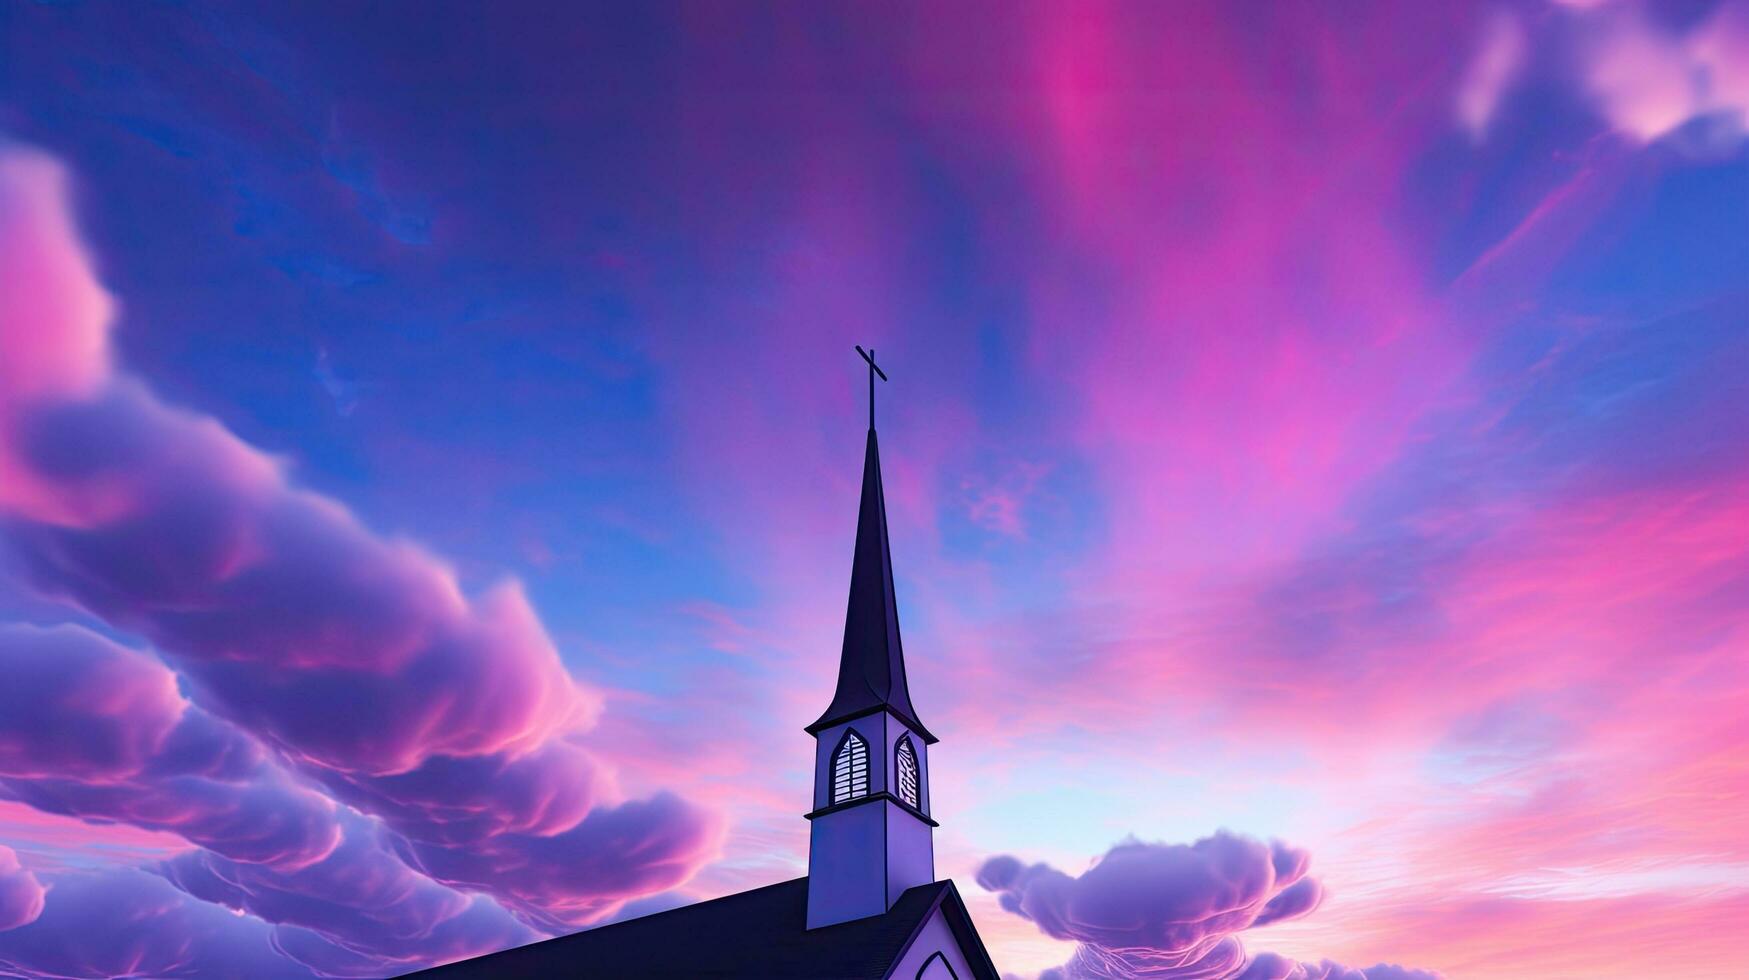 religiös Gebäude Silhouette gegen Blau lila Wolke gefüllt Himmel foto